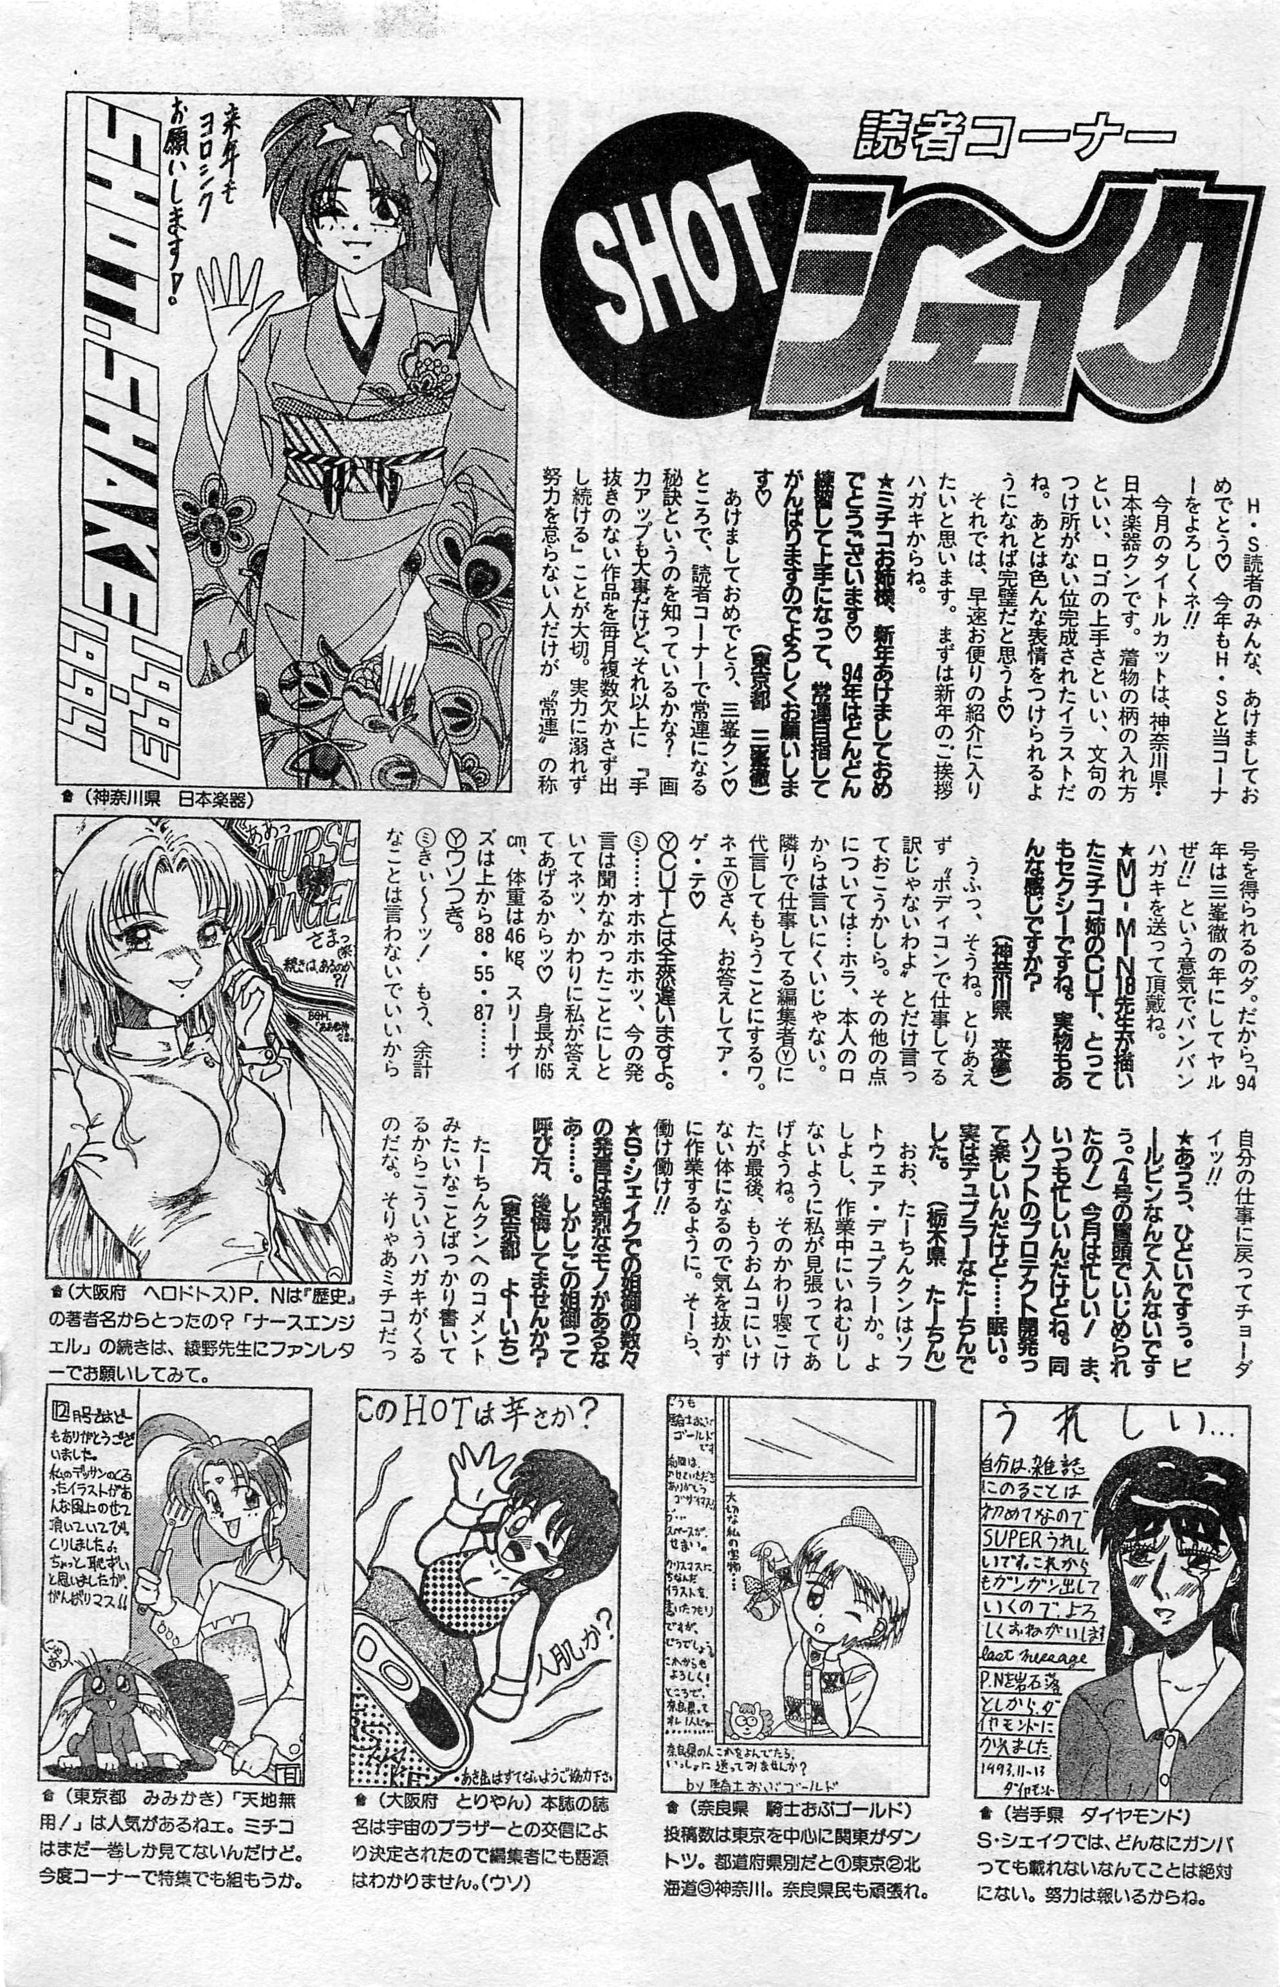 COMIC ホットシェイク キャンディータイム海賊版 1994年2月号増刊